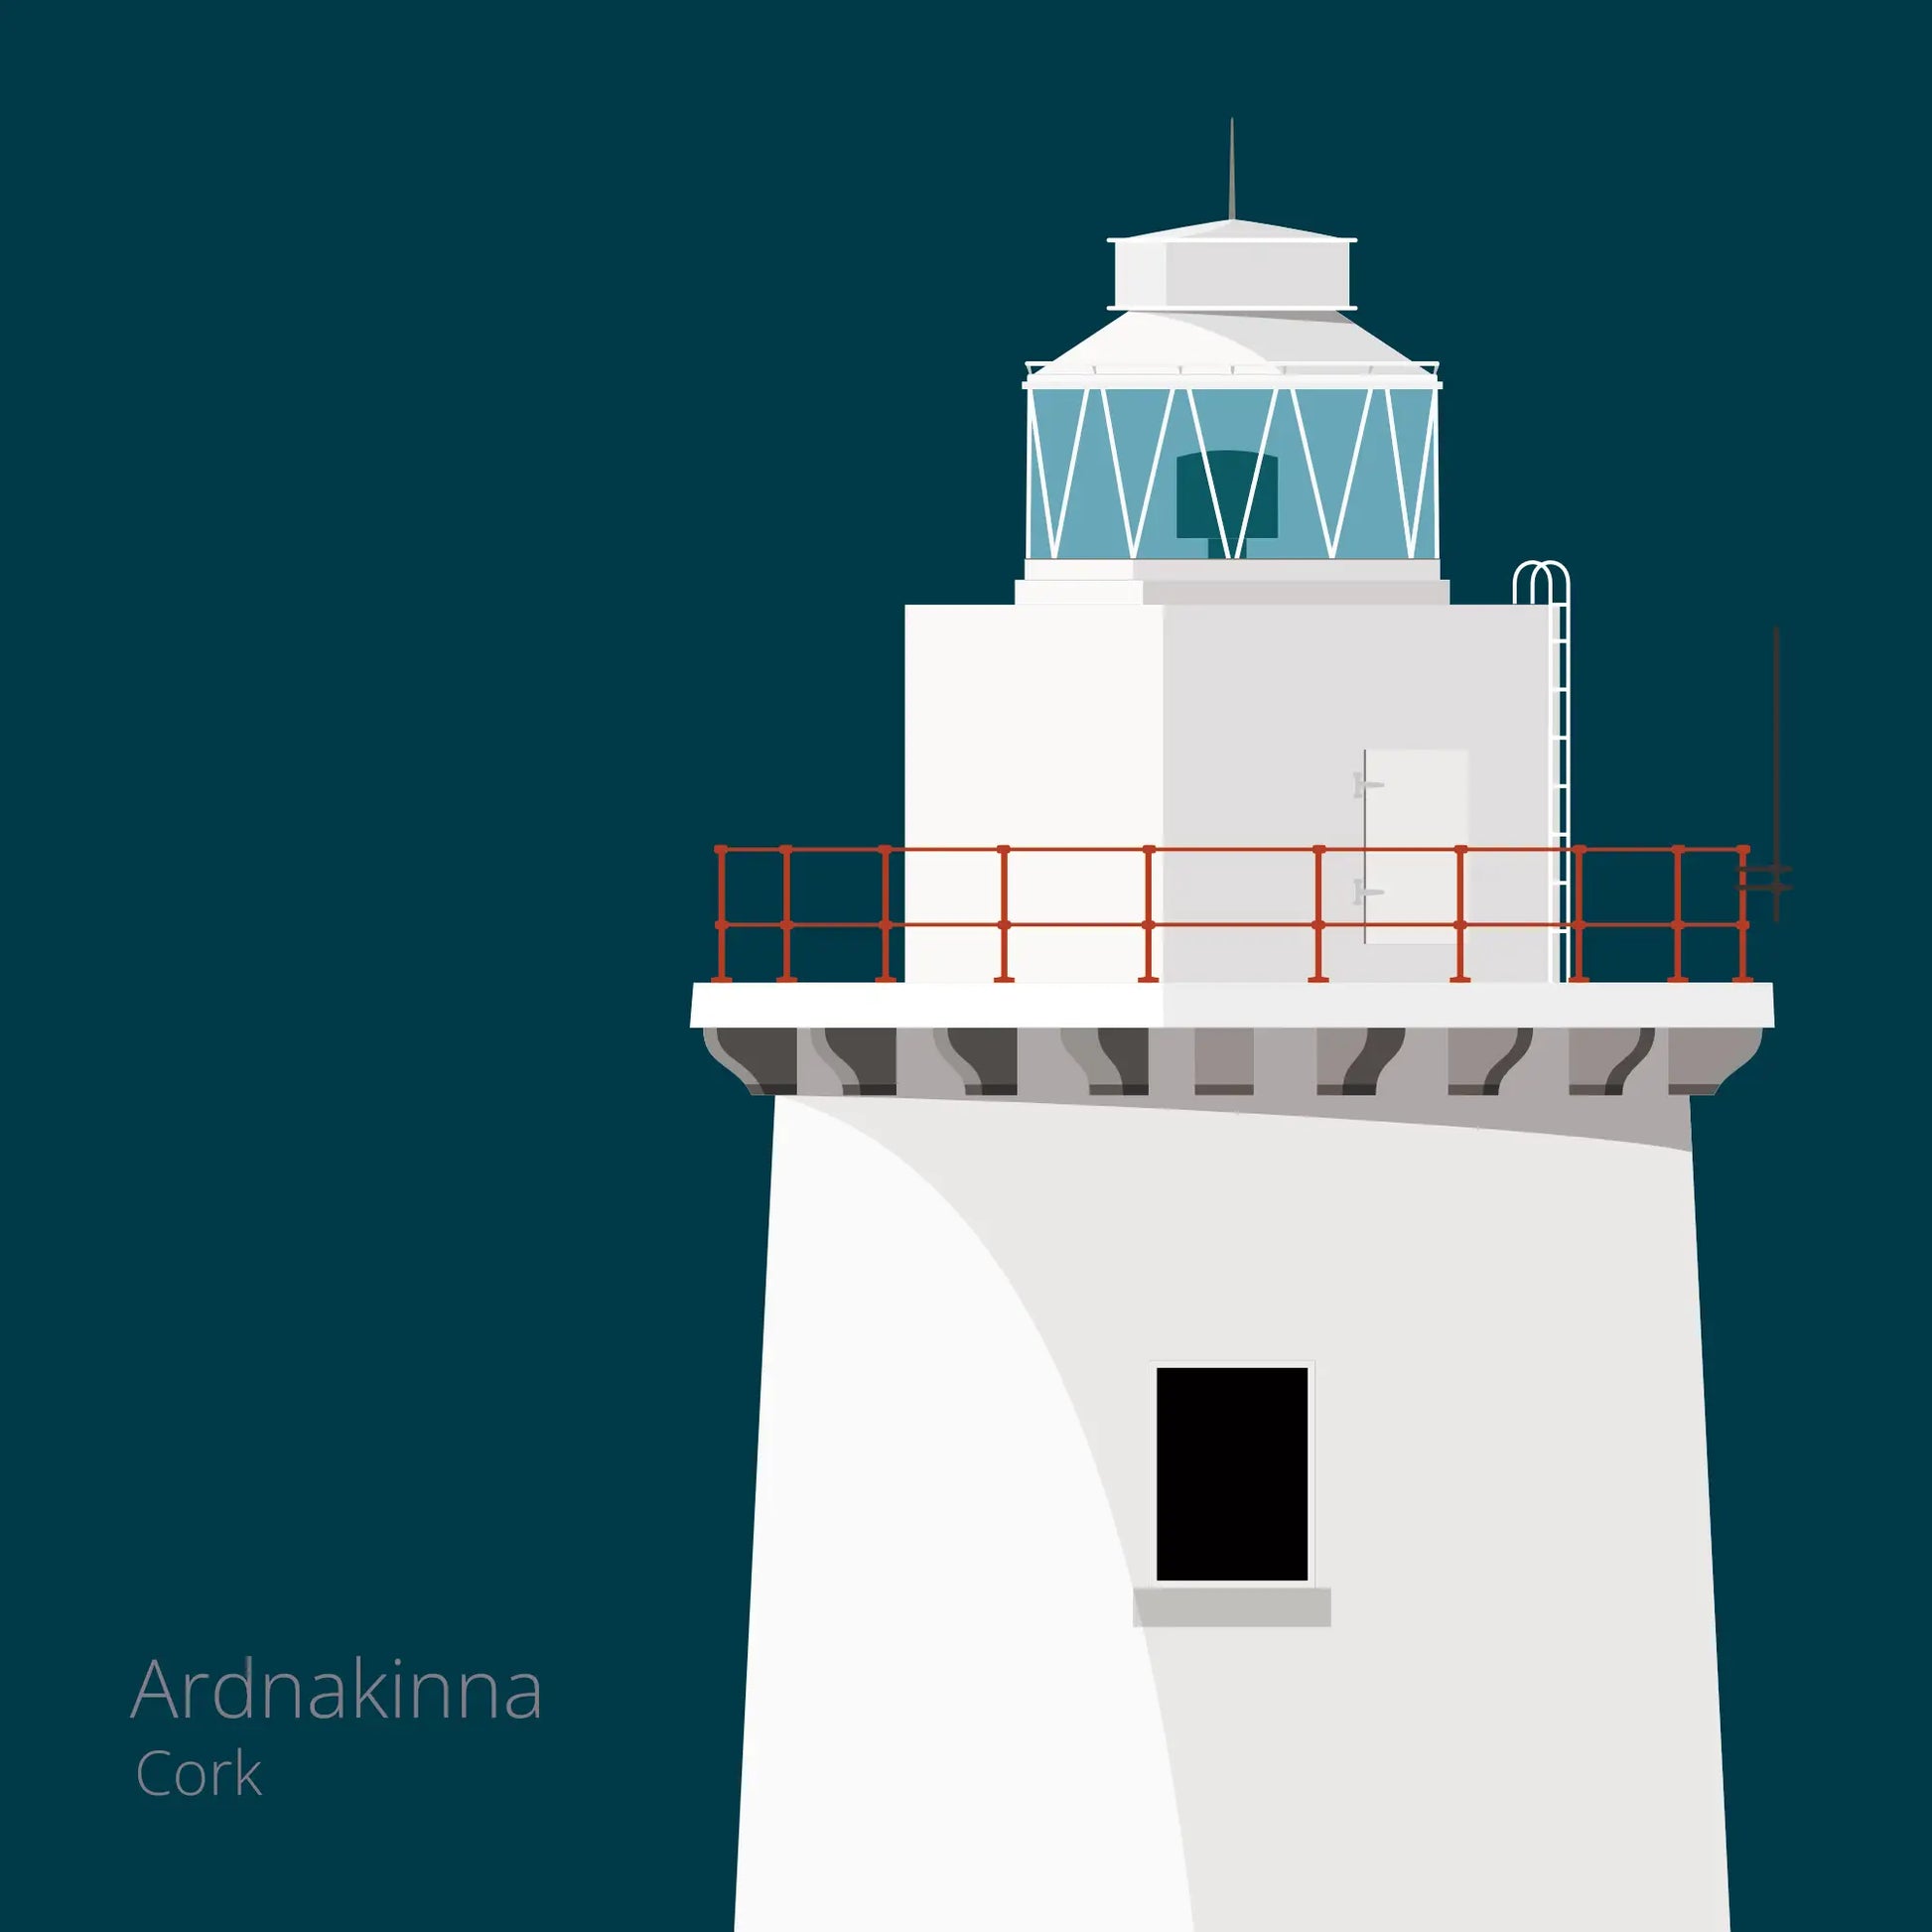 Illustration of Ardnakinna lighthouse on a midnight blue background